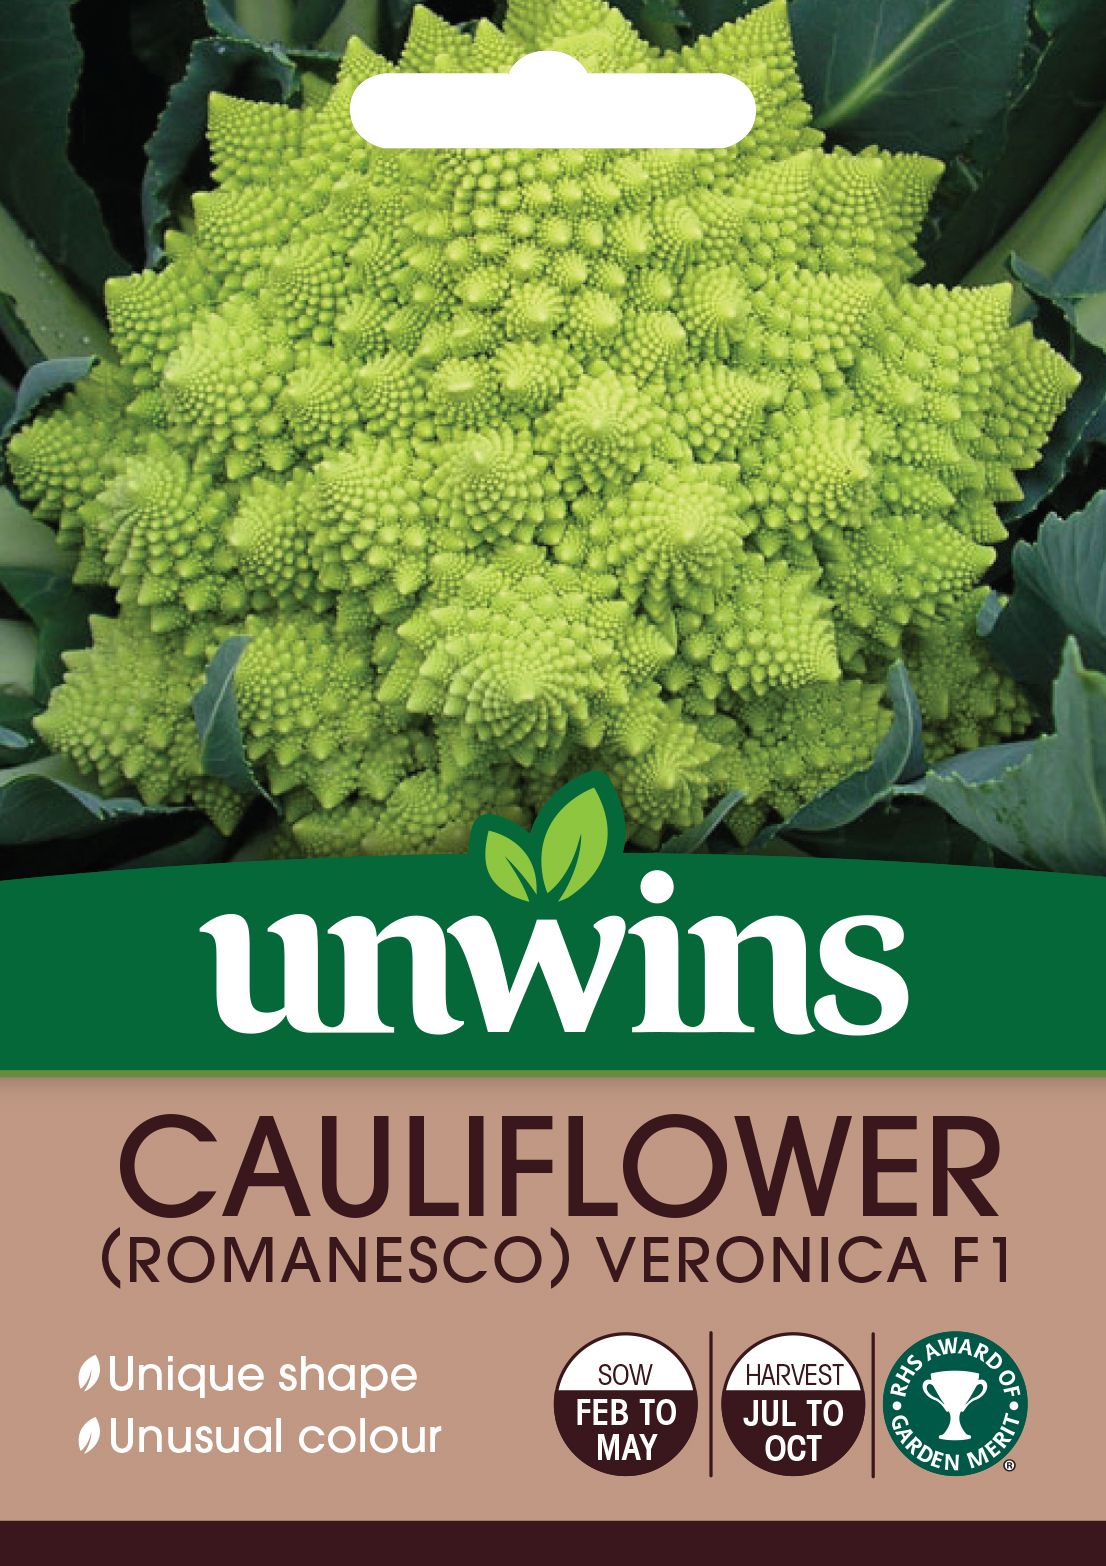 Cauliflower (Romanesco) Veronica F1